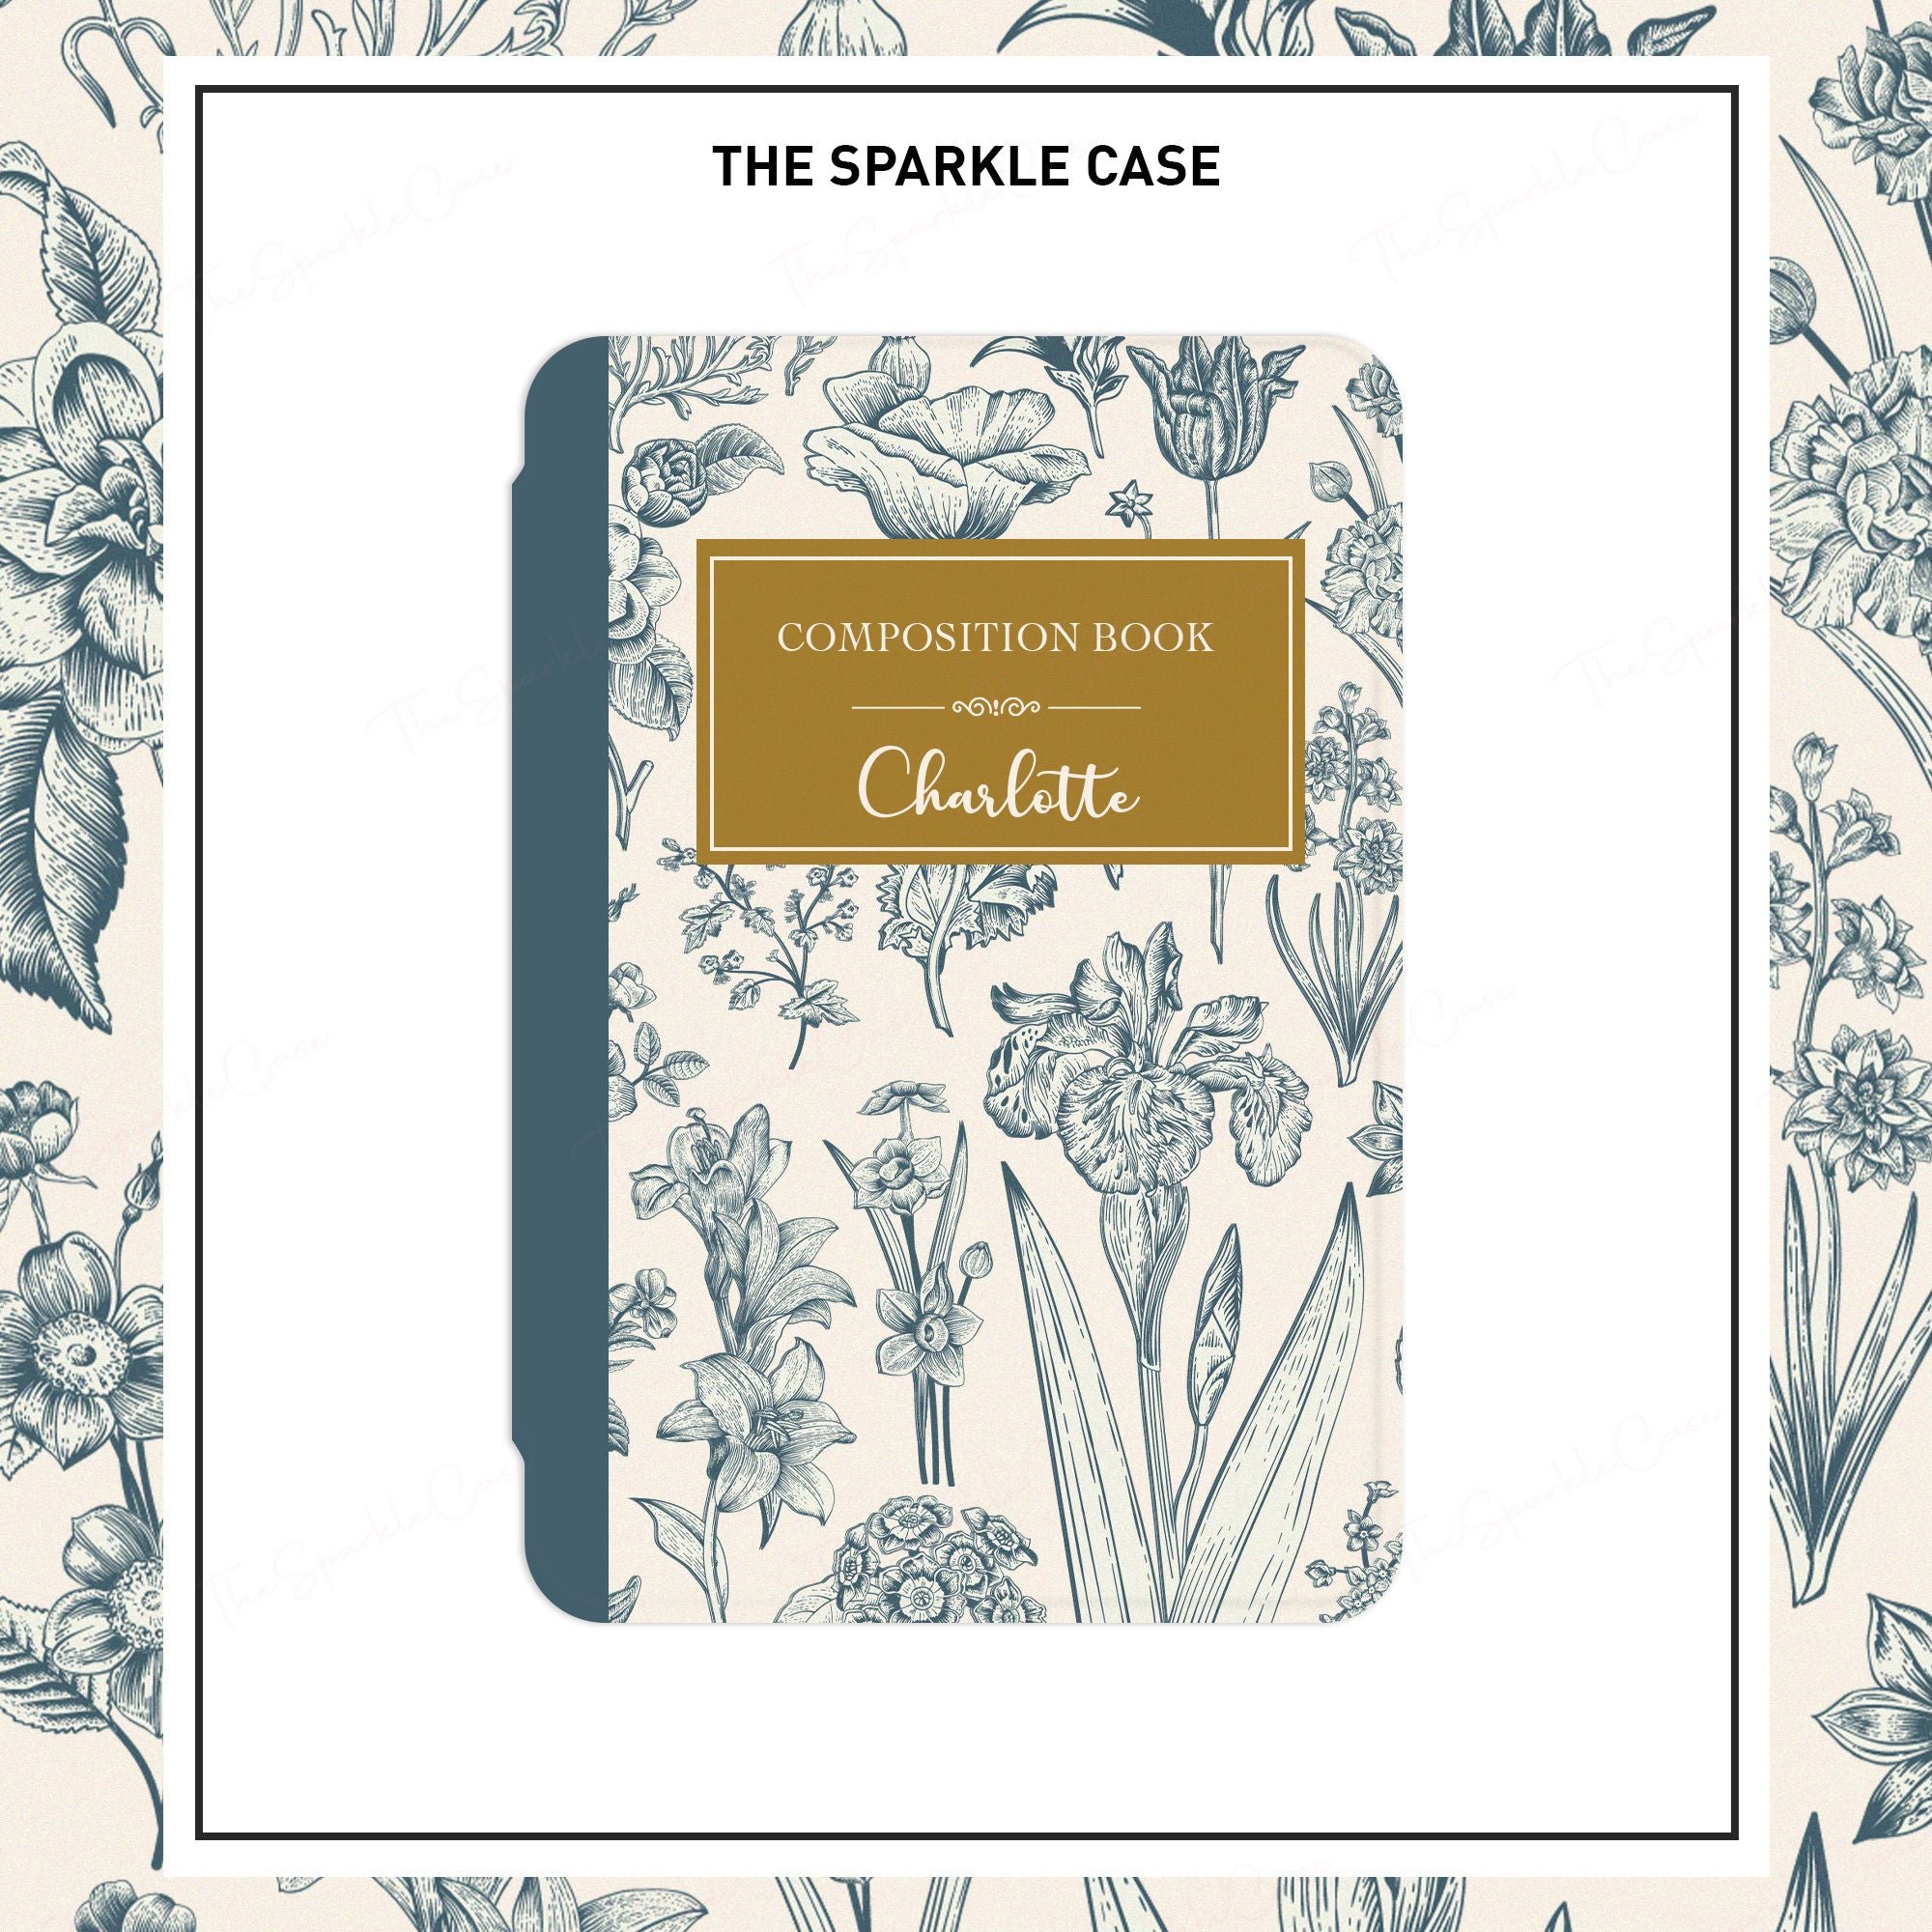 Custom Kindle case paperwhite Aesthetic Botanical Cover Free Personalization